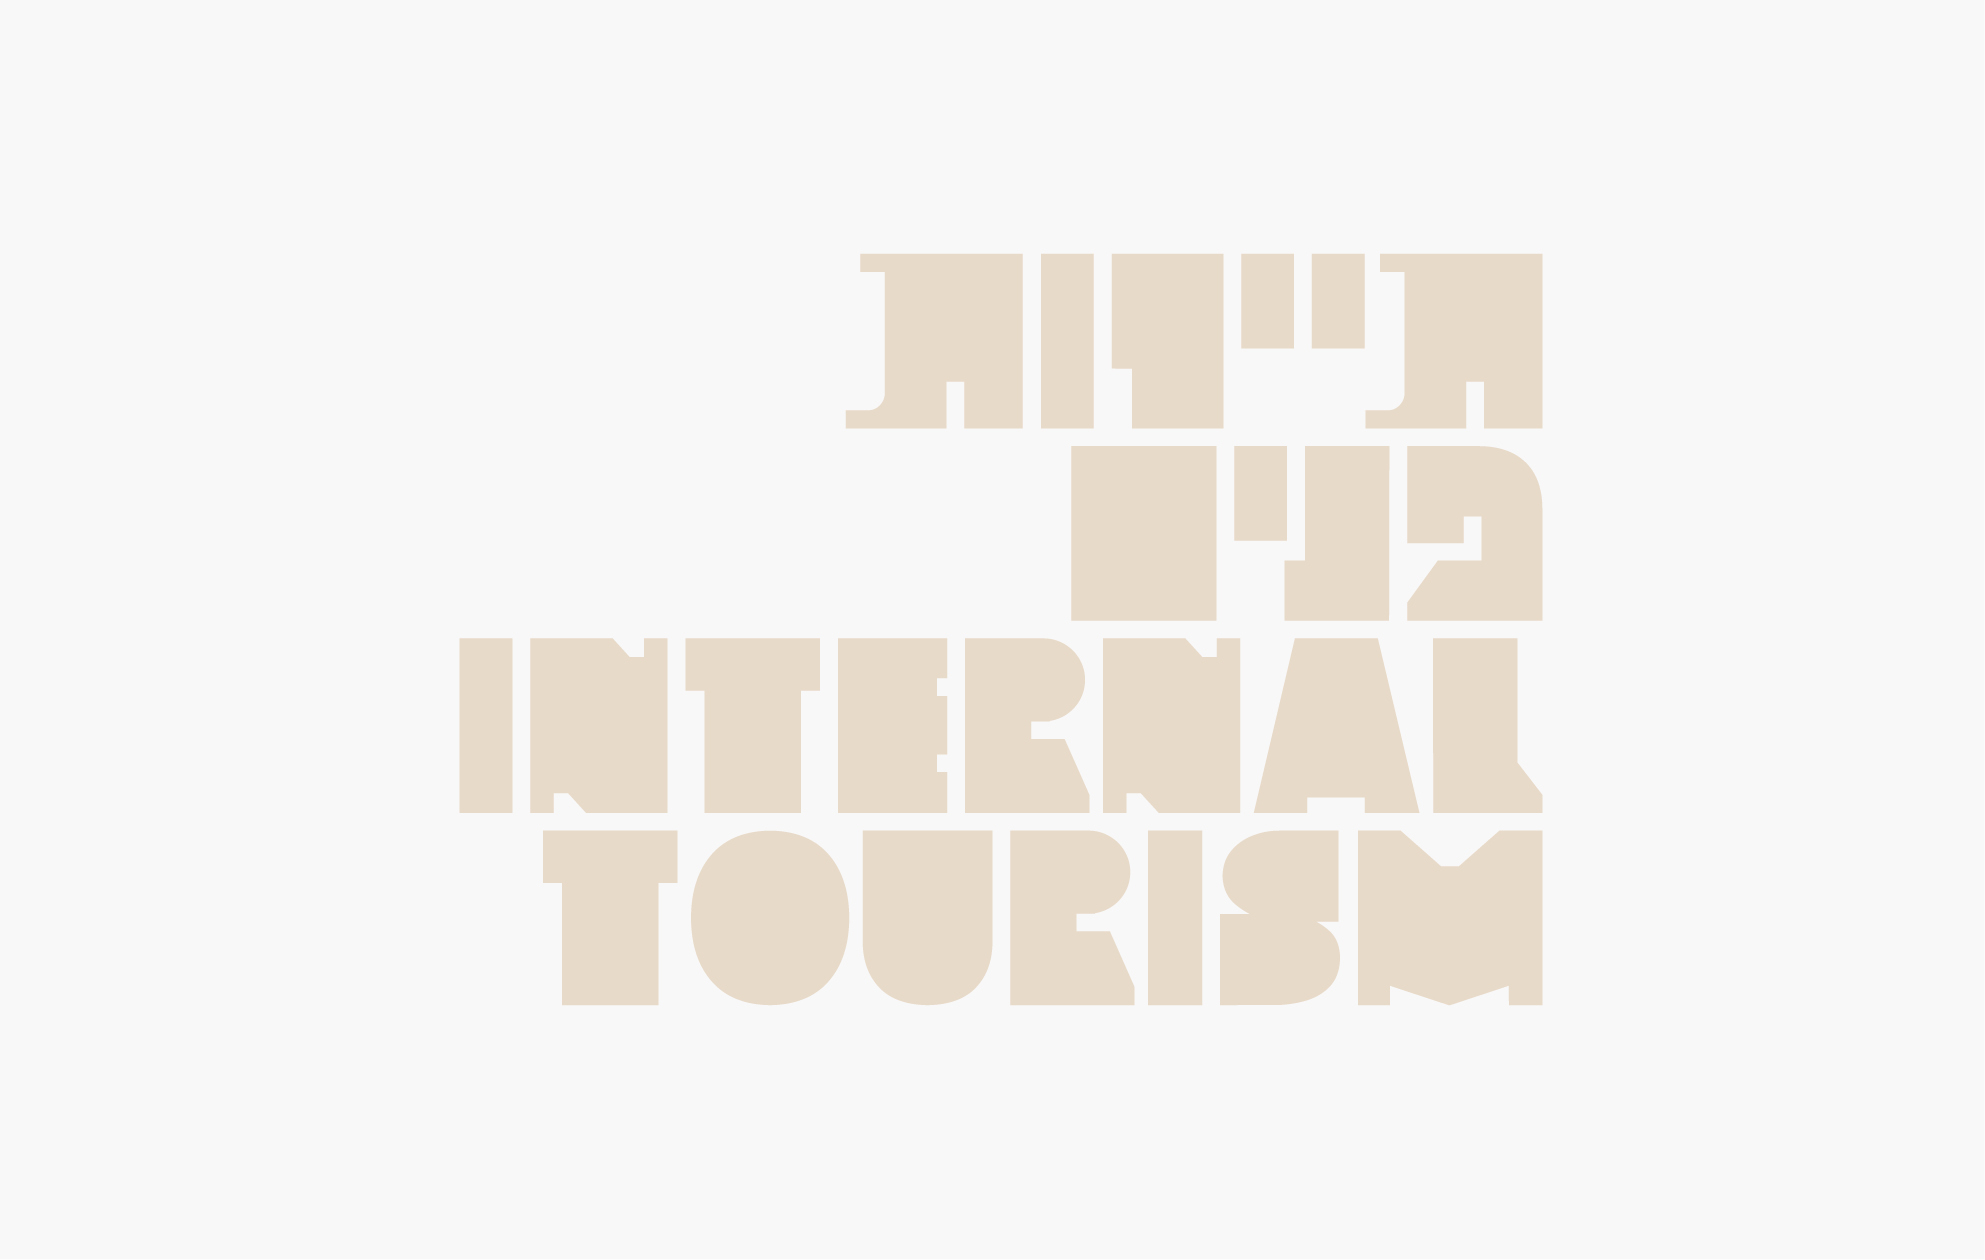 INTERNAL TOURISM